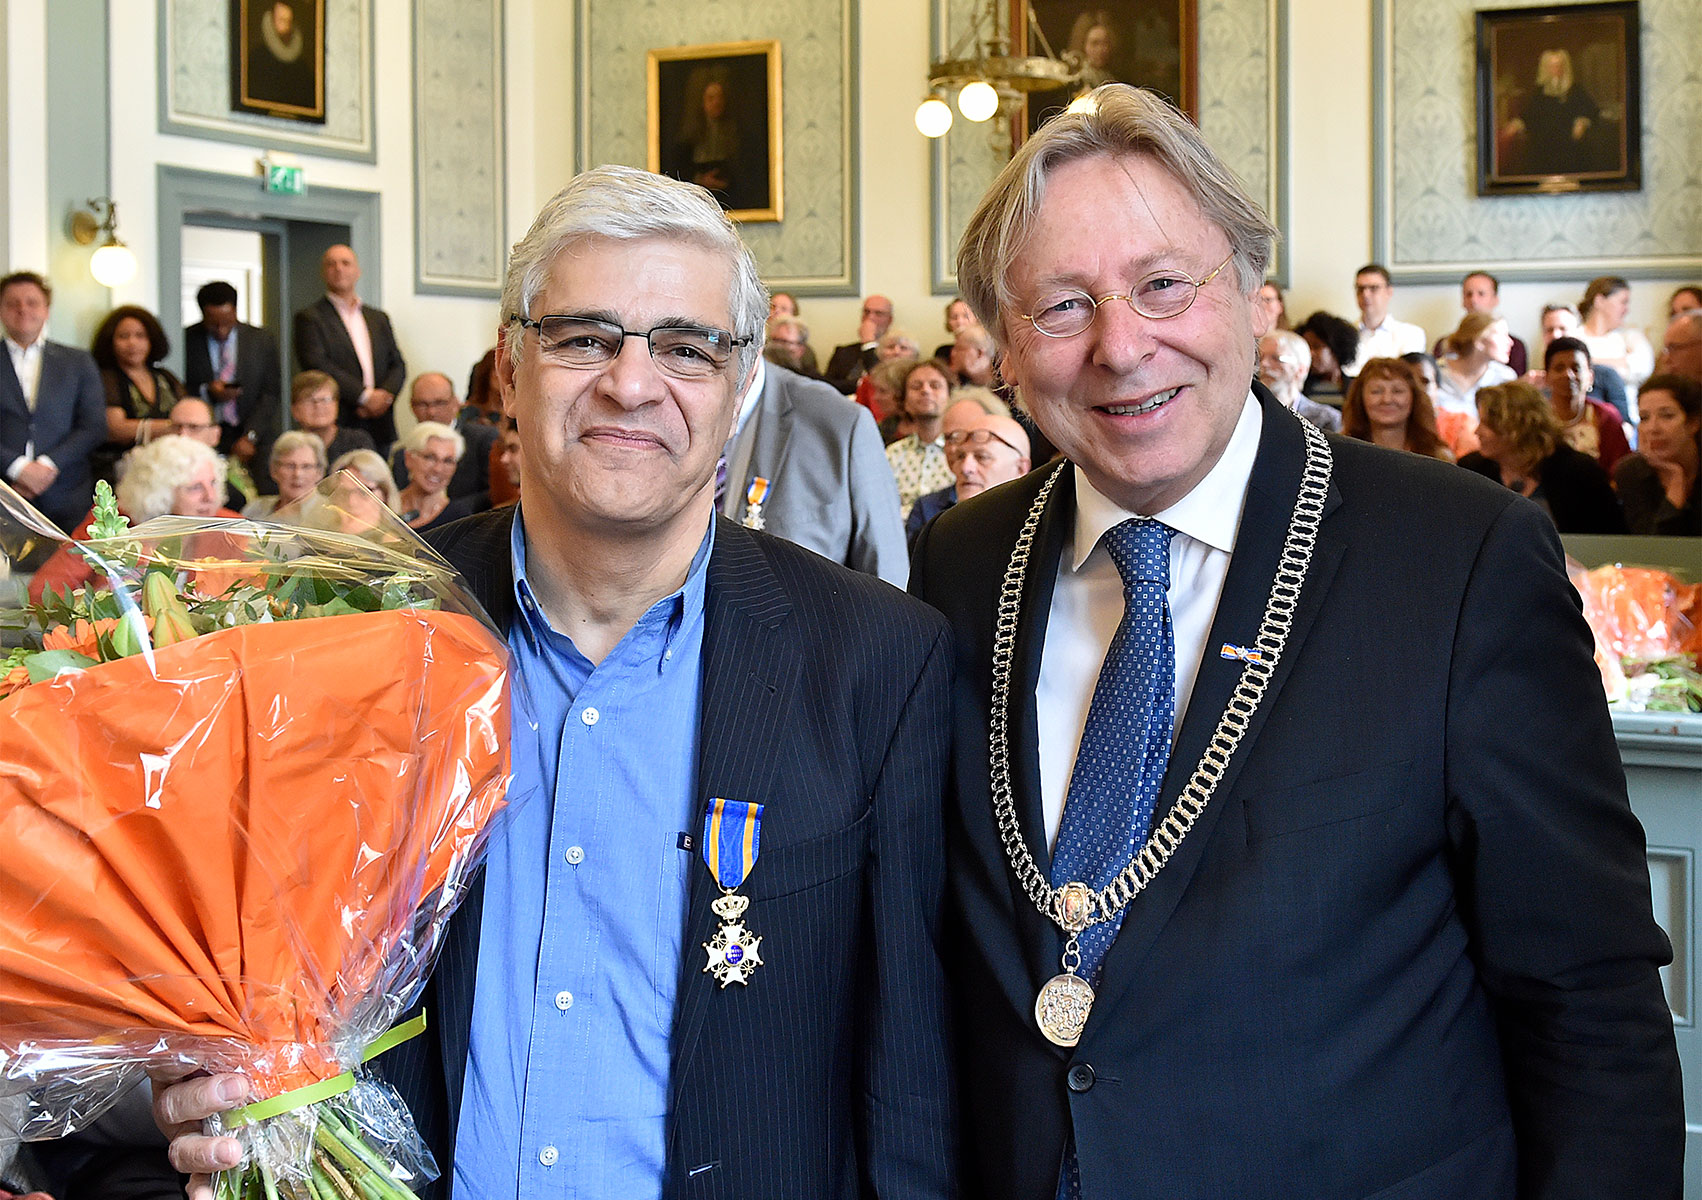 Prof. Nasser Kalantar-Nayestanaki and the mayor of Groningen, Peter den Oudsten